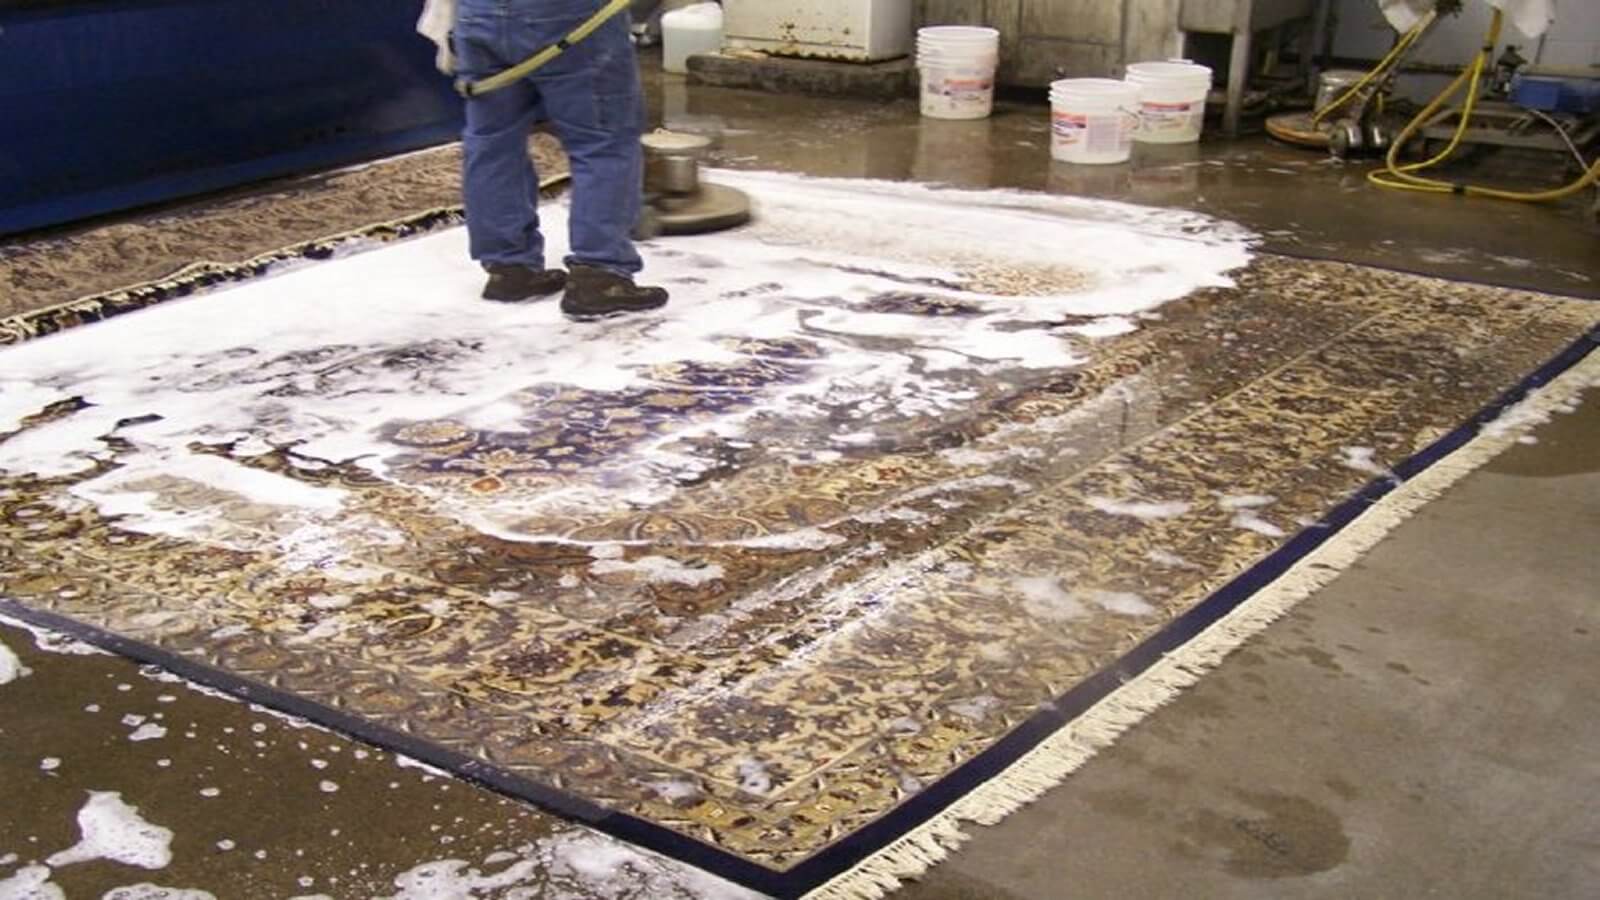 oriental rug cleaning